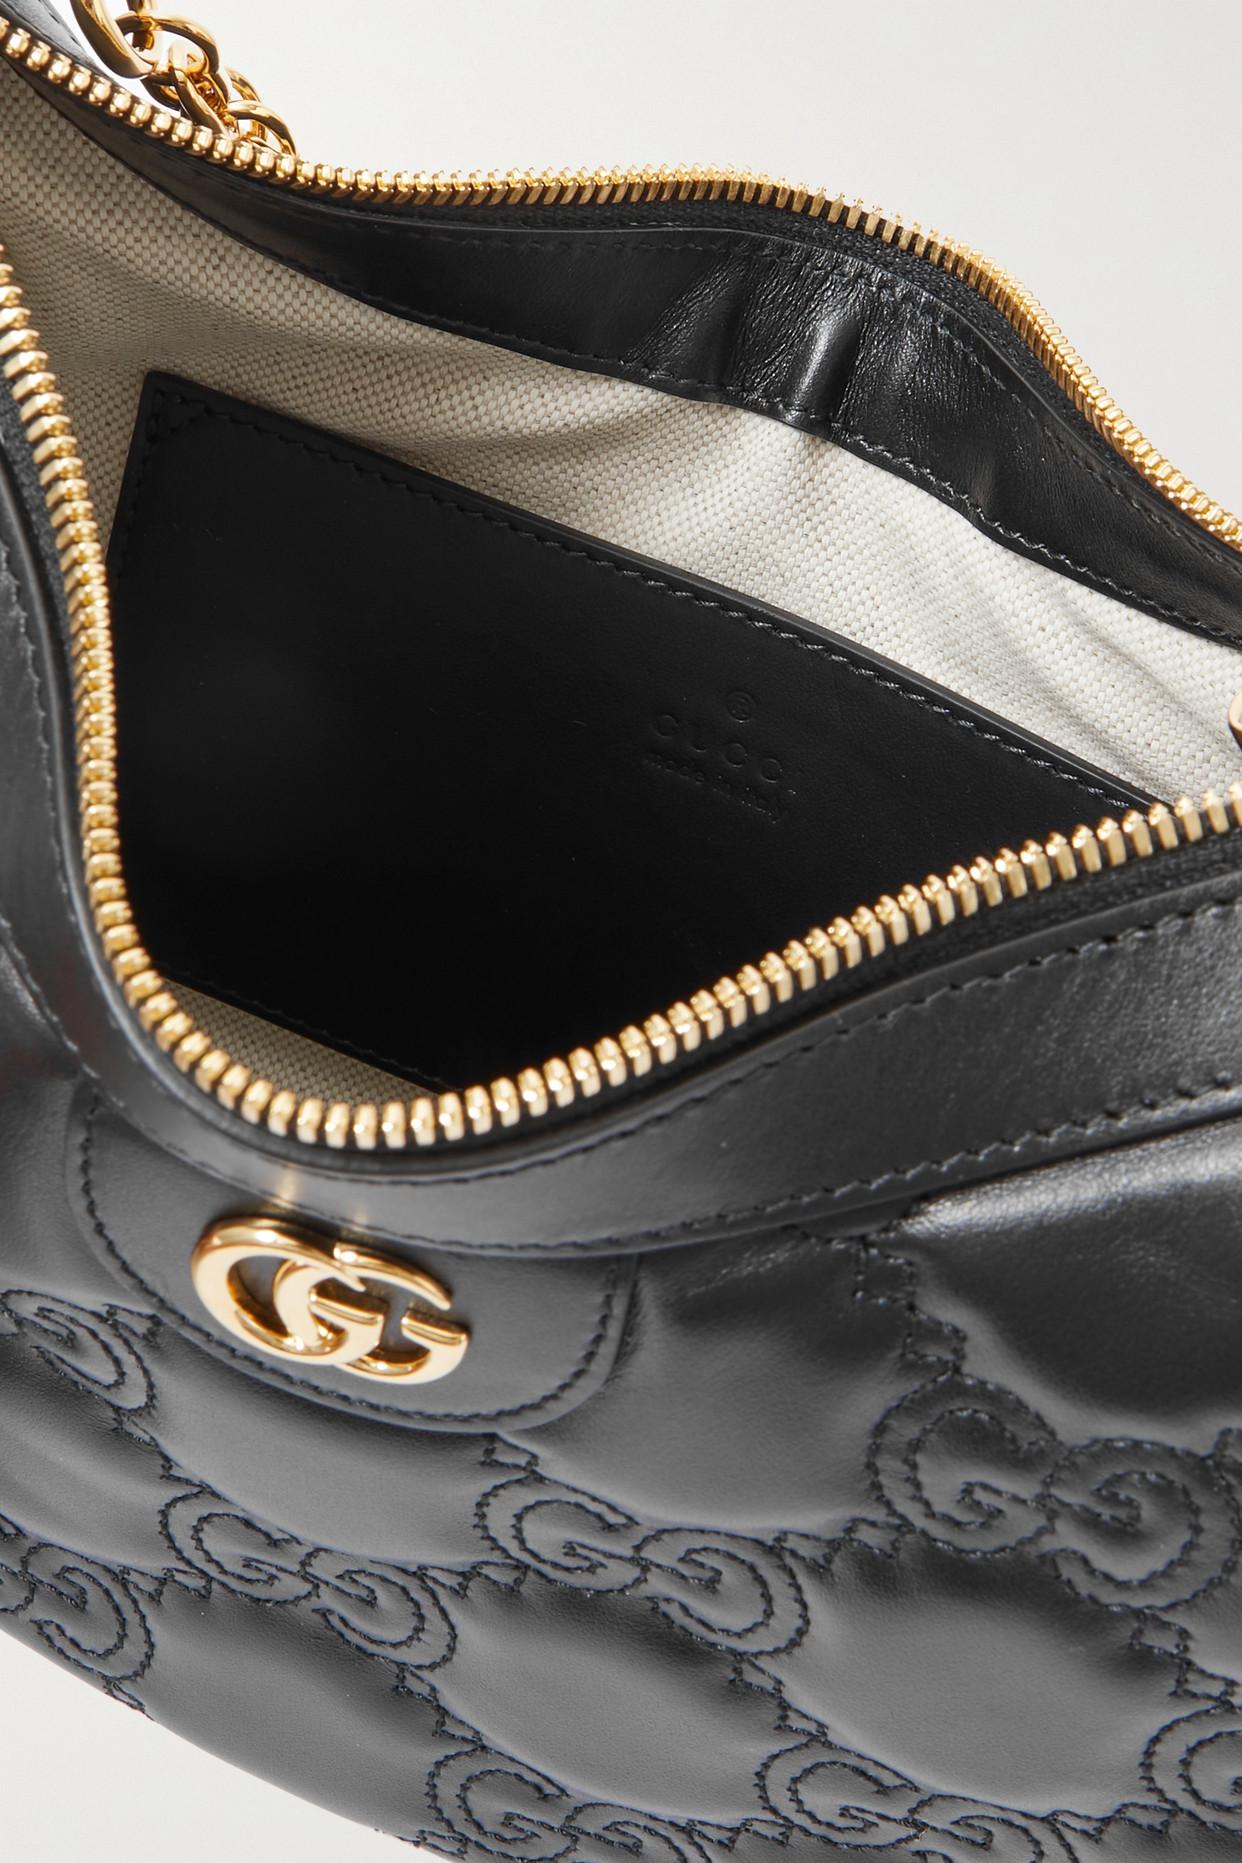 Gucci | Top Handle Shoulder Bag Soho New Satchel Black Gold Leather Tote |  Chaussure fashion, Sac à main, S'habiller